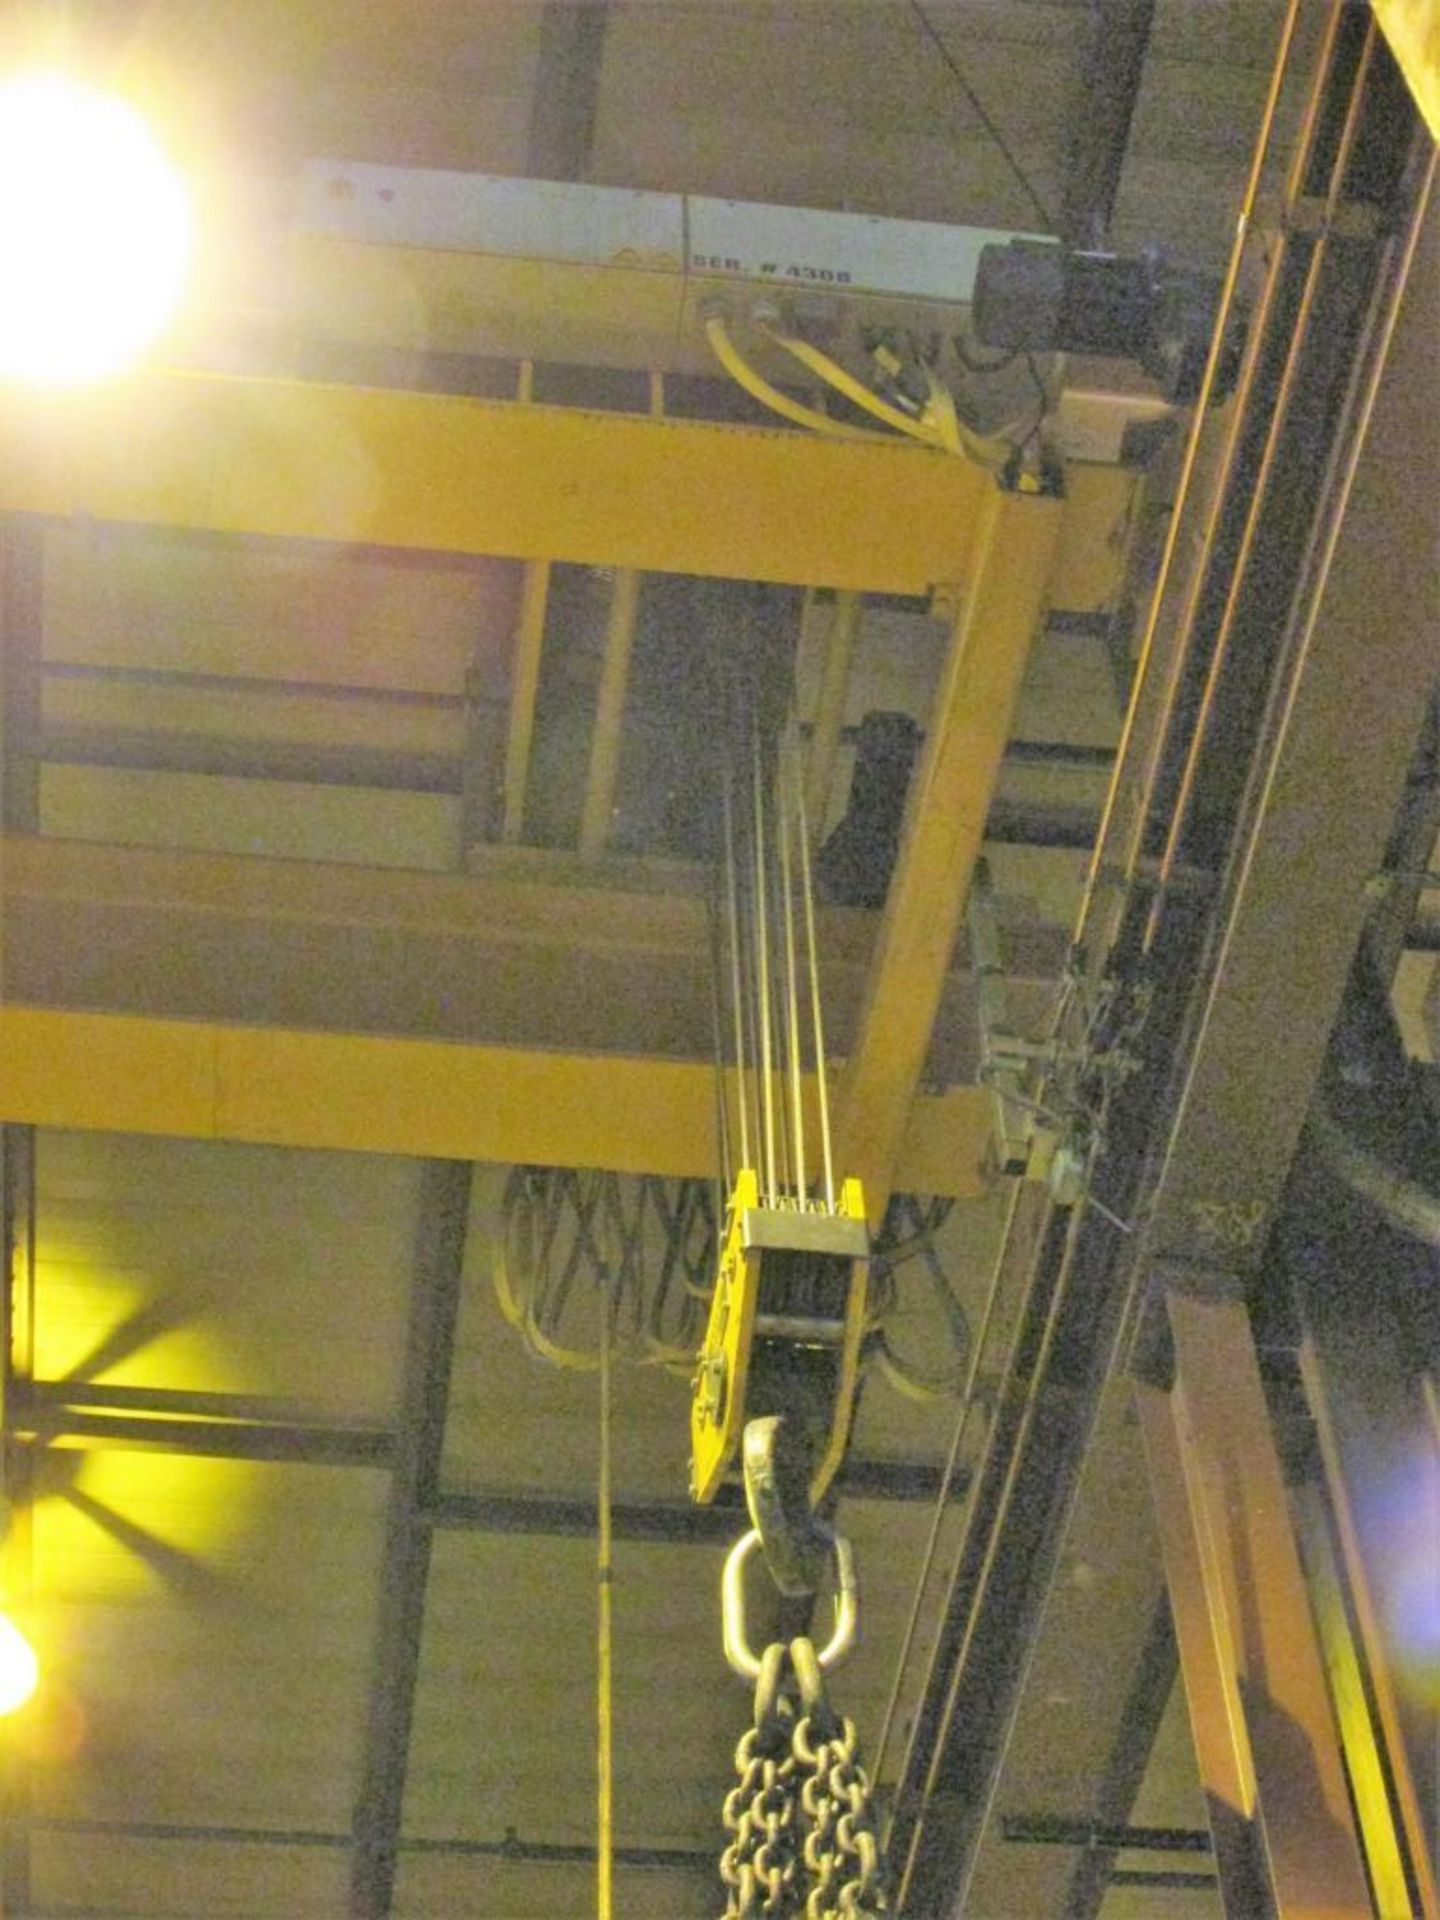 Kone 25 Ton Top Riding, Double Girder Overhead Bridge Crane Approximately 45' Span, Pendant Control - Image 5 of 8